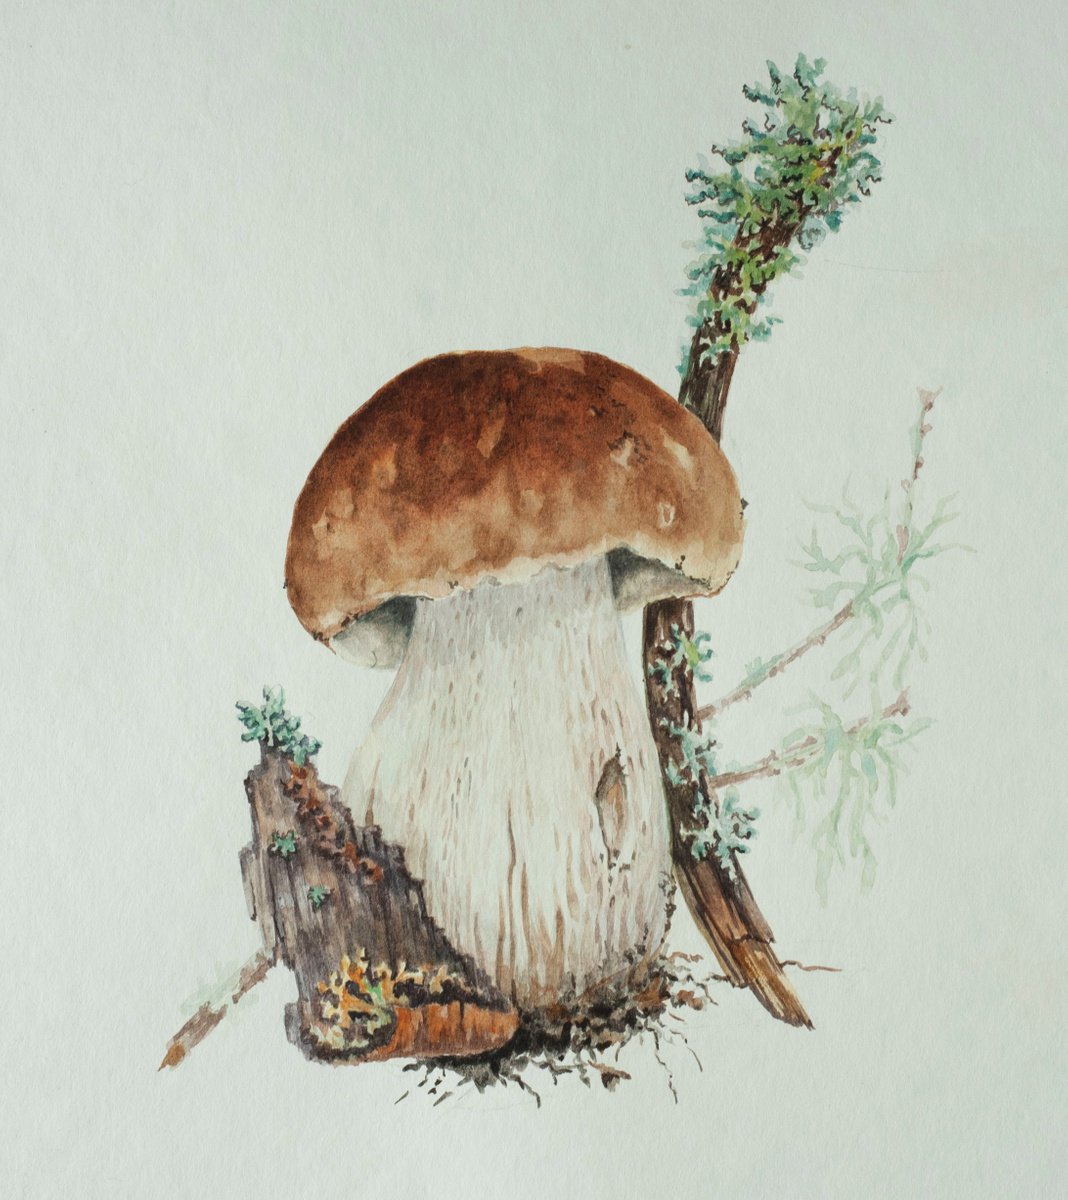 Mushroom botanical illustration by Maria Chernobrovkina